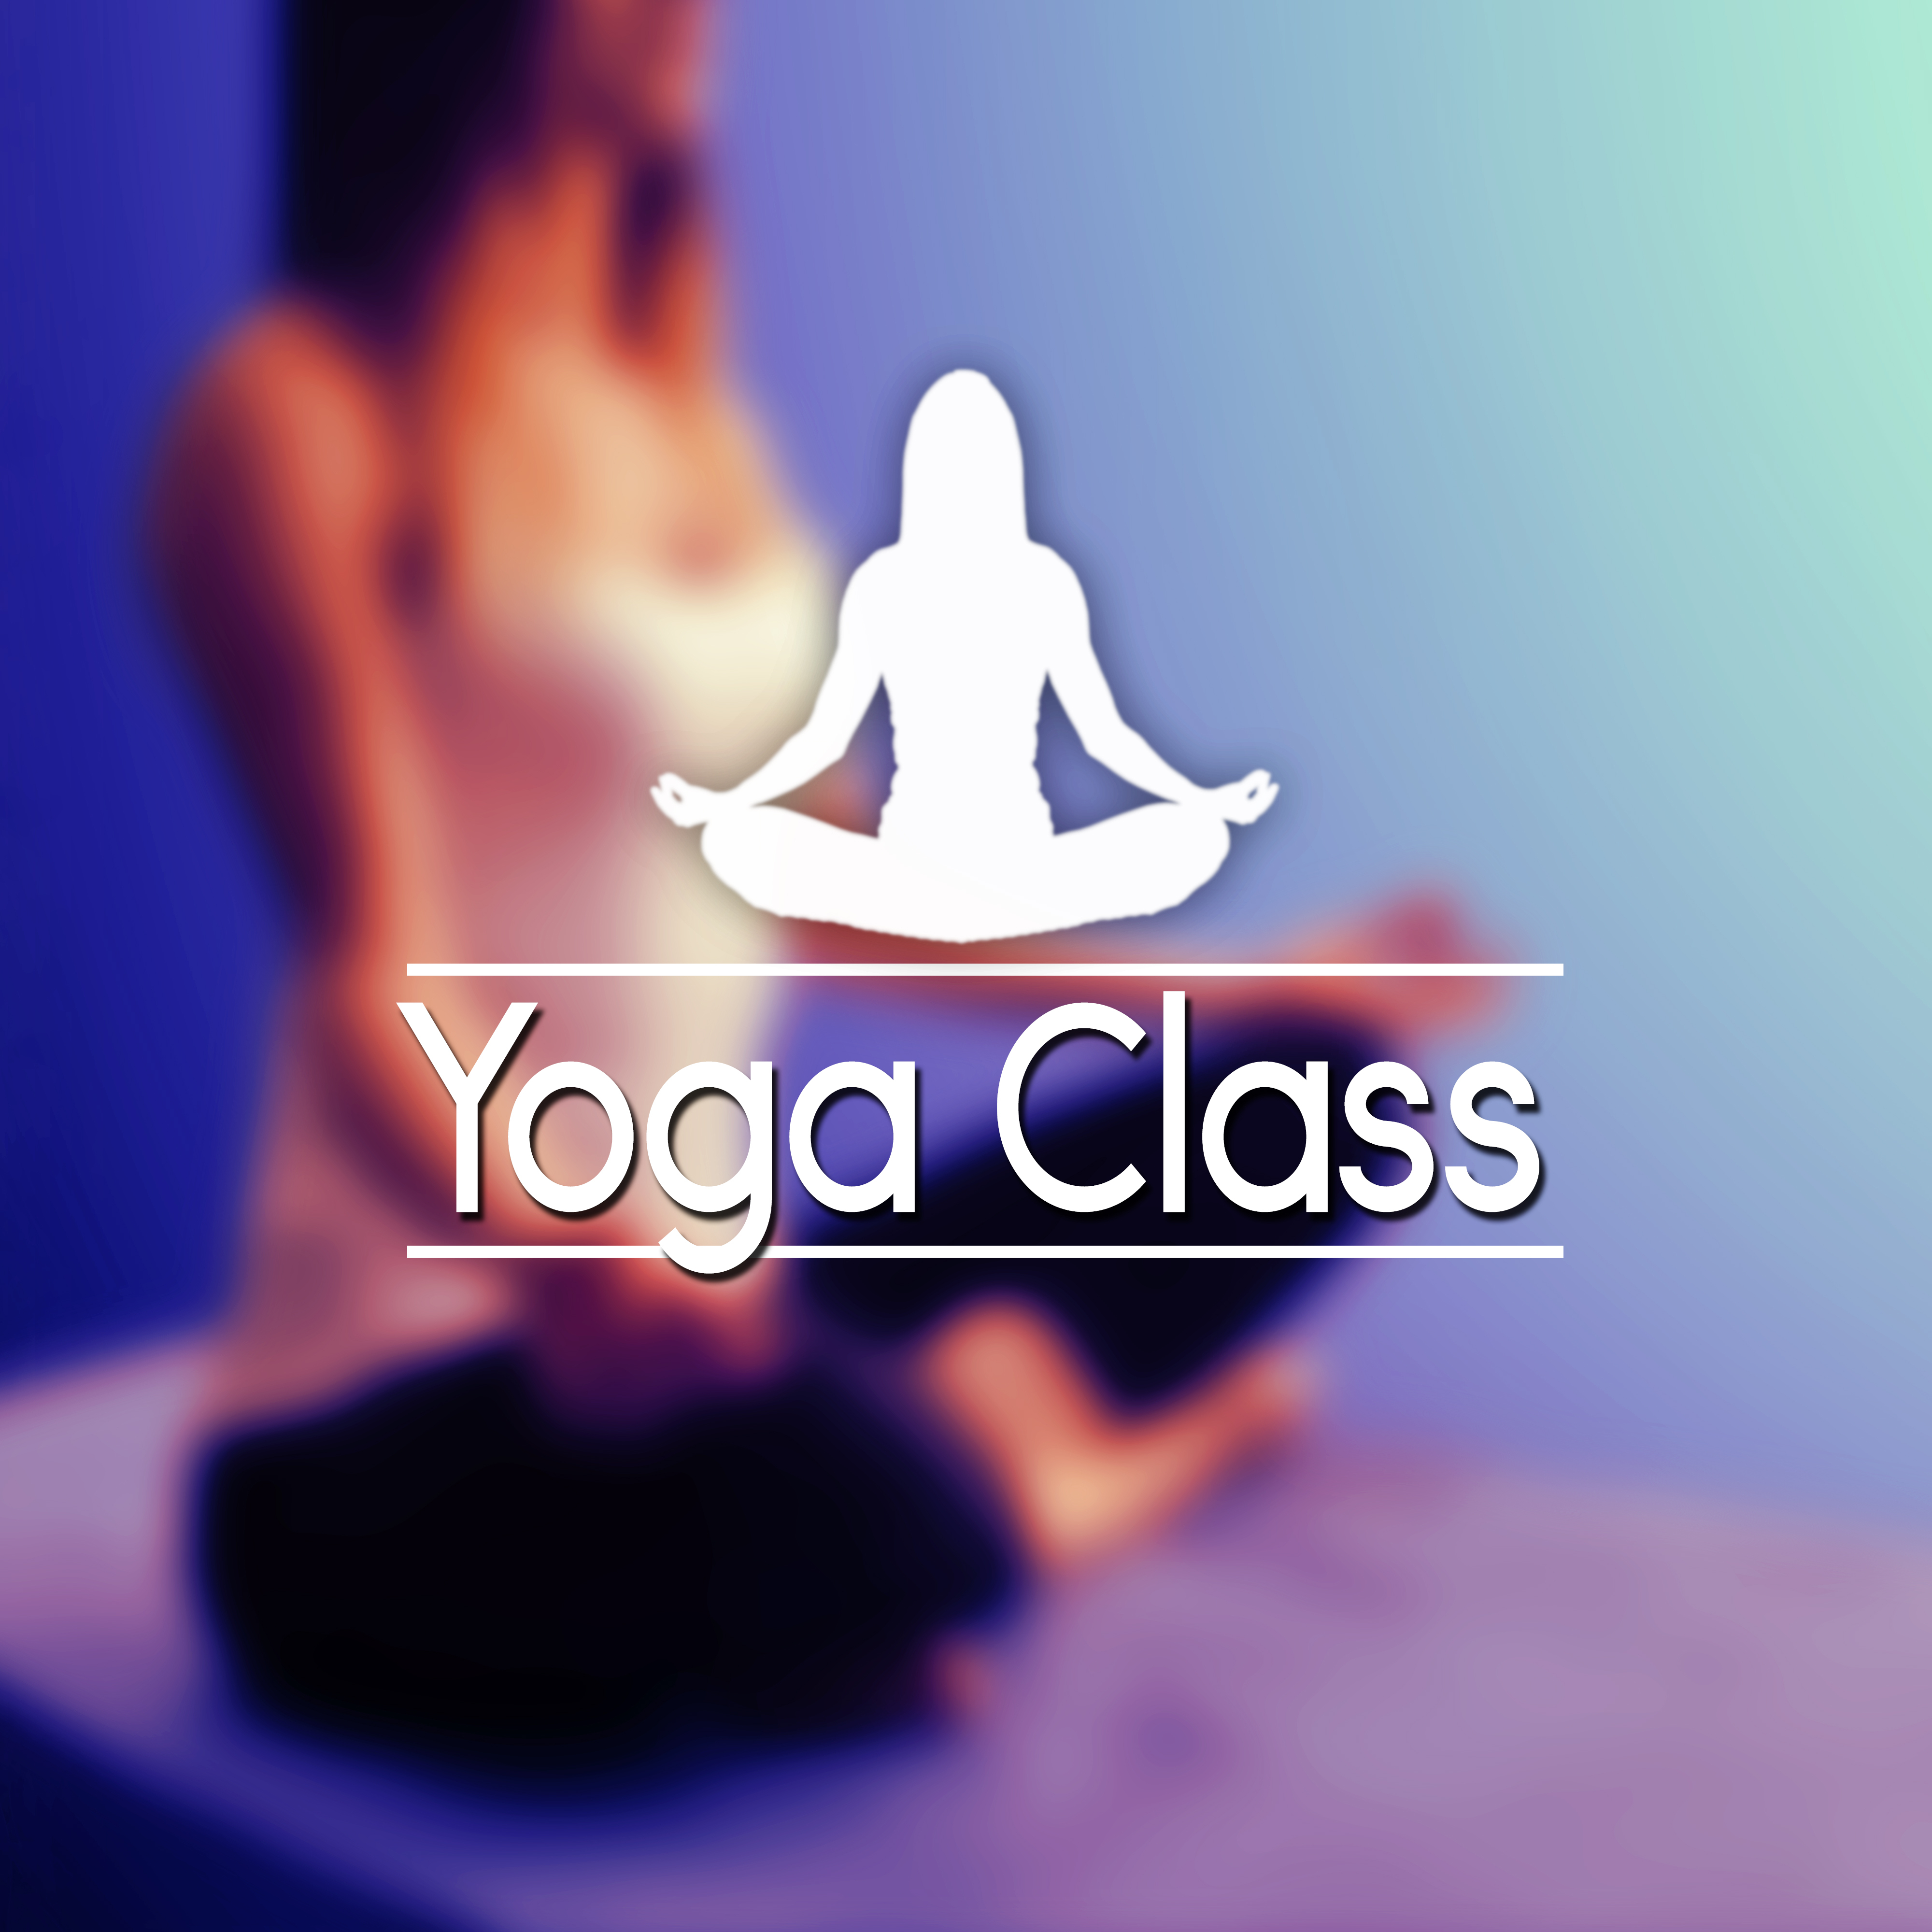 Yoga Class – Basic Meditation for Beginners with Nature Sounds, Ocean Sounds for & Mindfulness Meditation, Zen, Reiki, Sleep, Body Balance